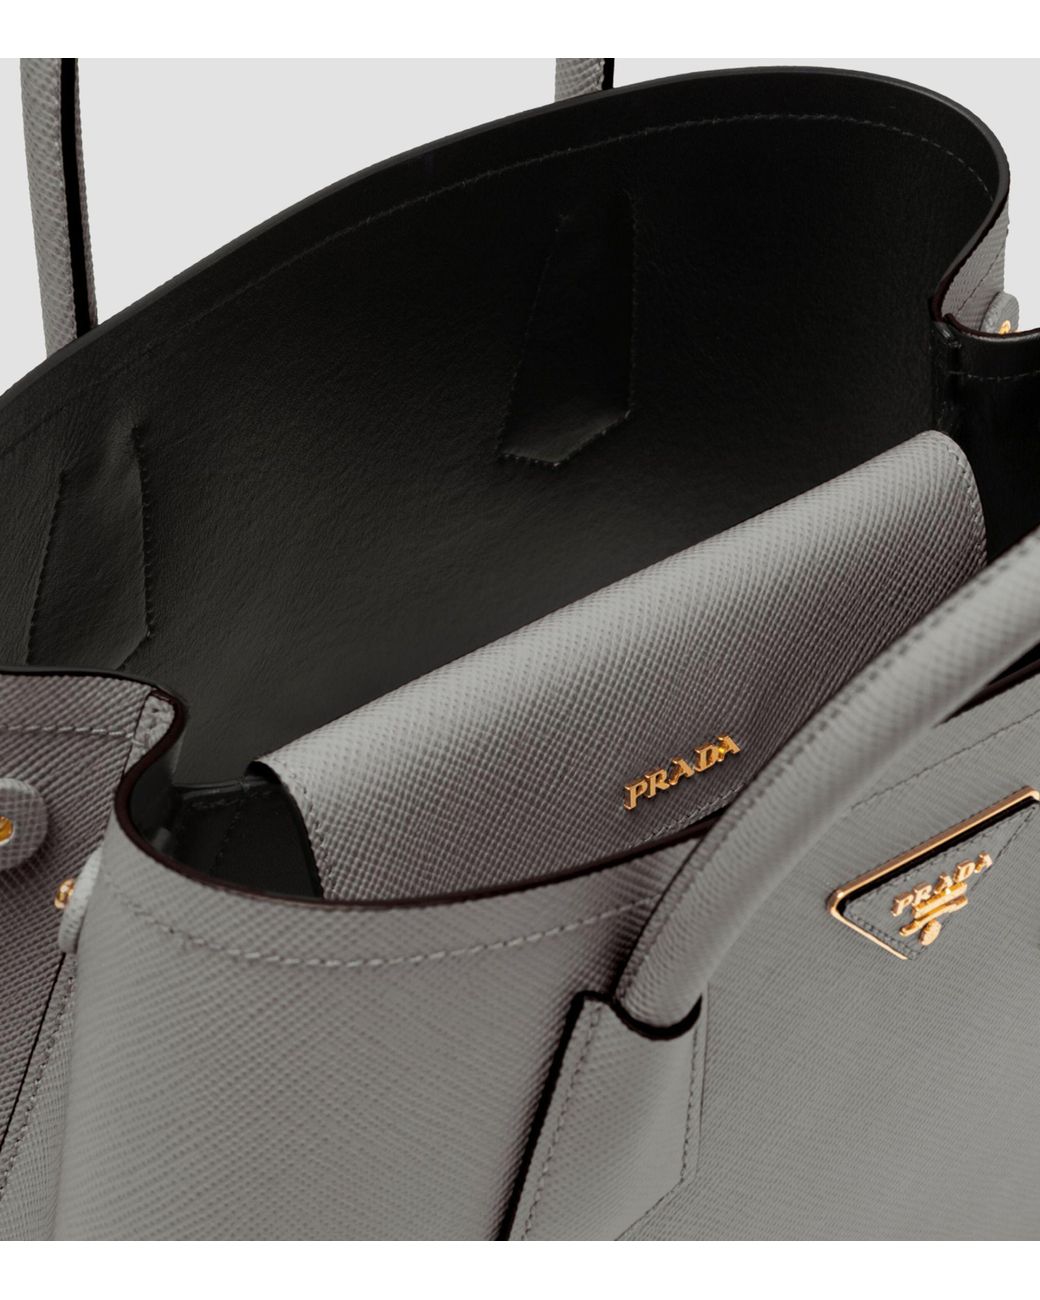 Small Saffiano Leather Double Prada Bag